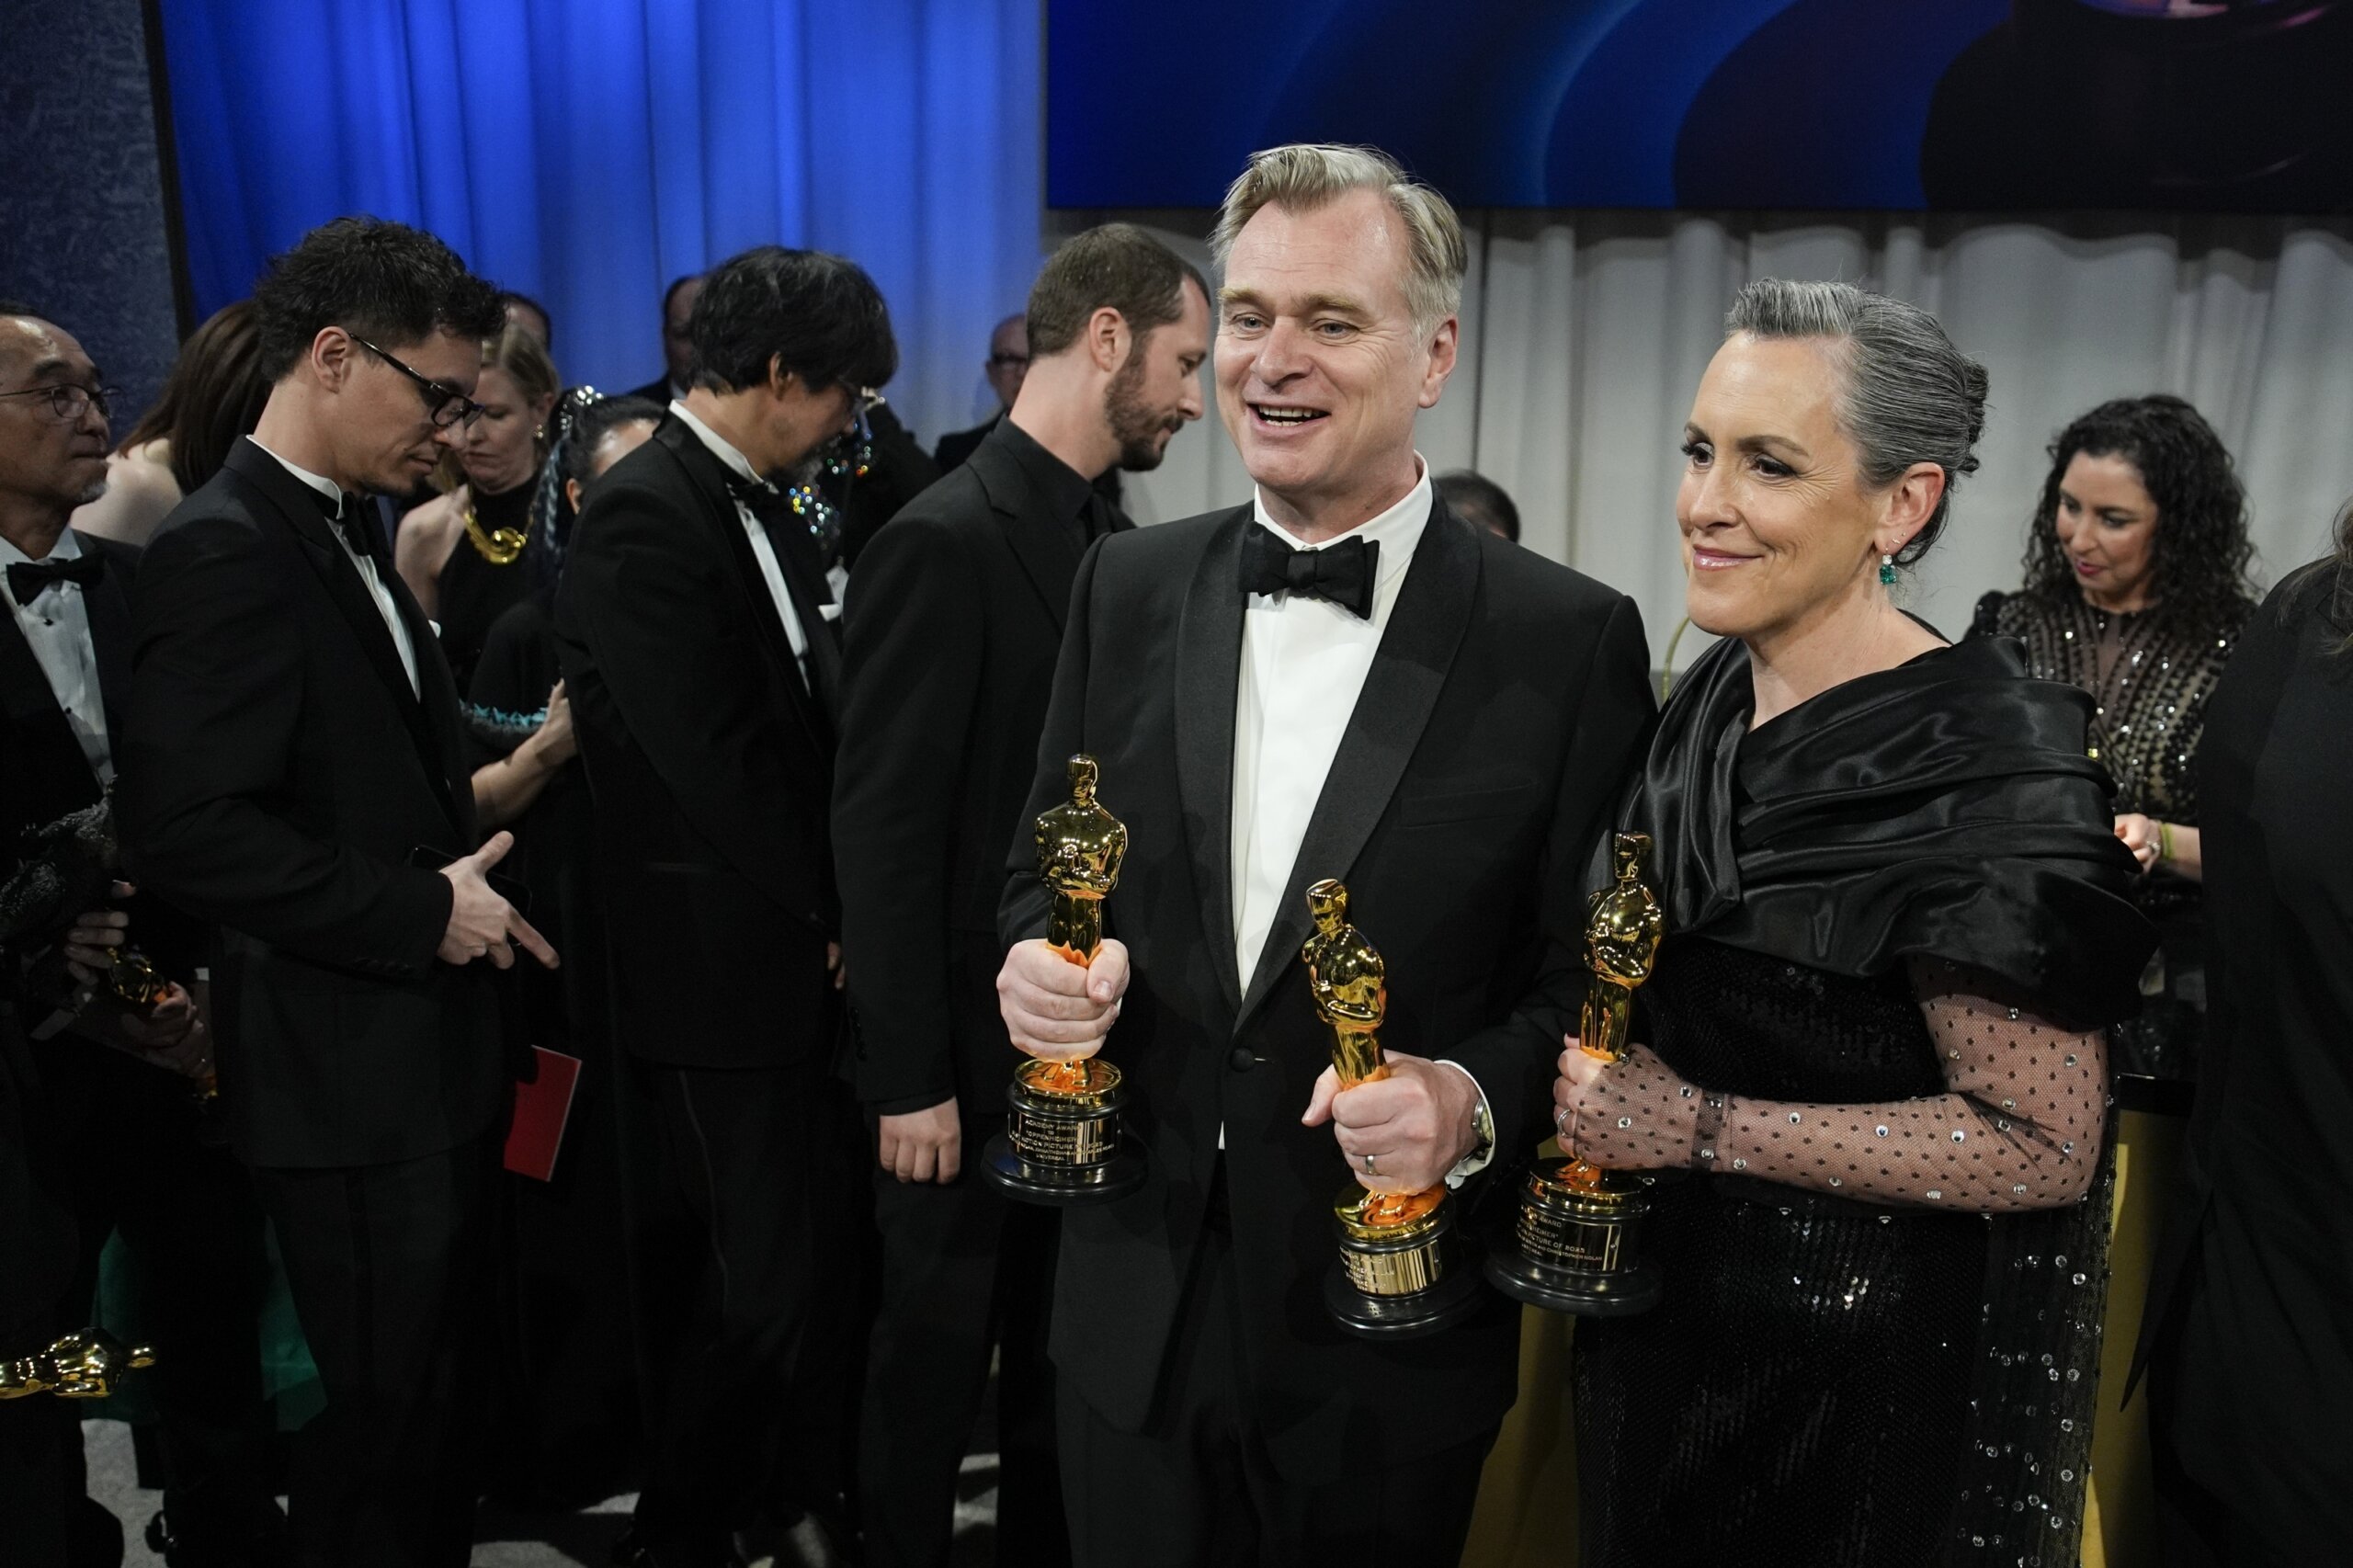 96th Academy Awards - Governors Ball